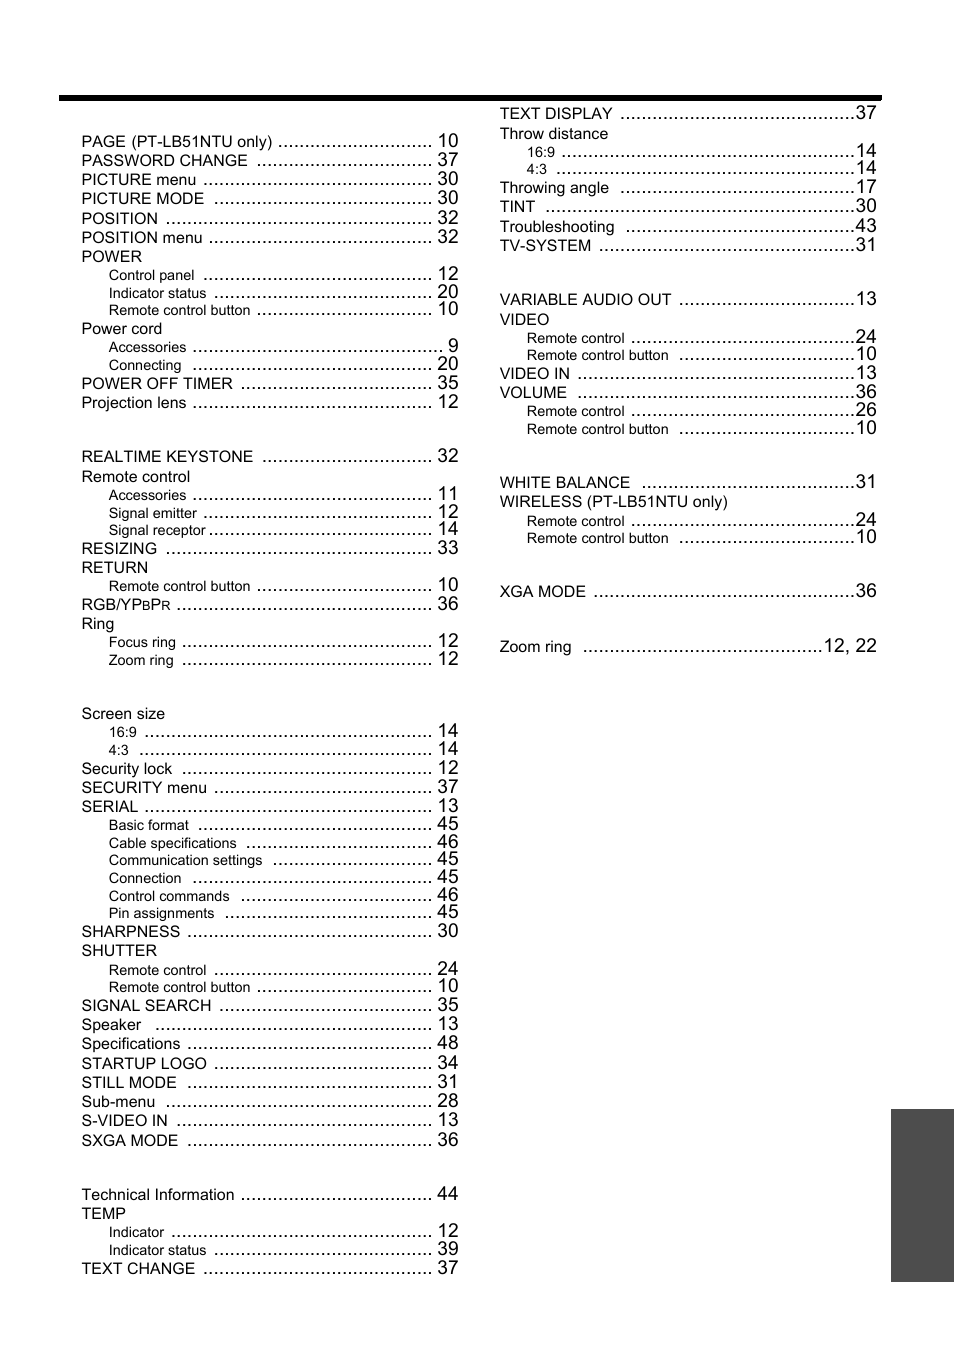 Nglish - 53, Index | Panasonic PT-LB51SU Manuel d'utilisation | Page 53 / 62